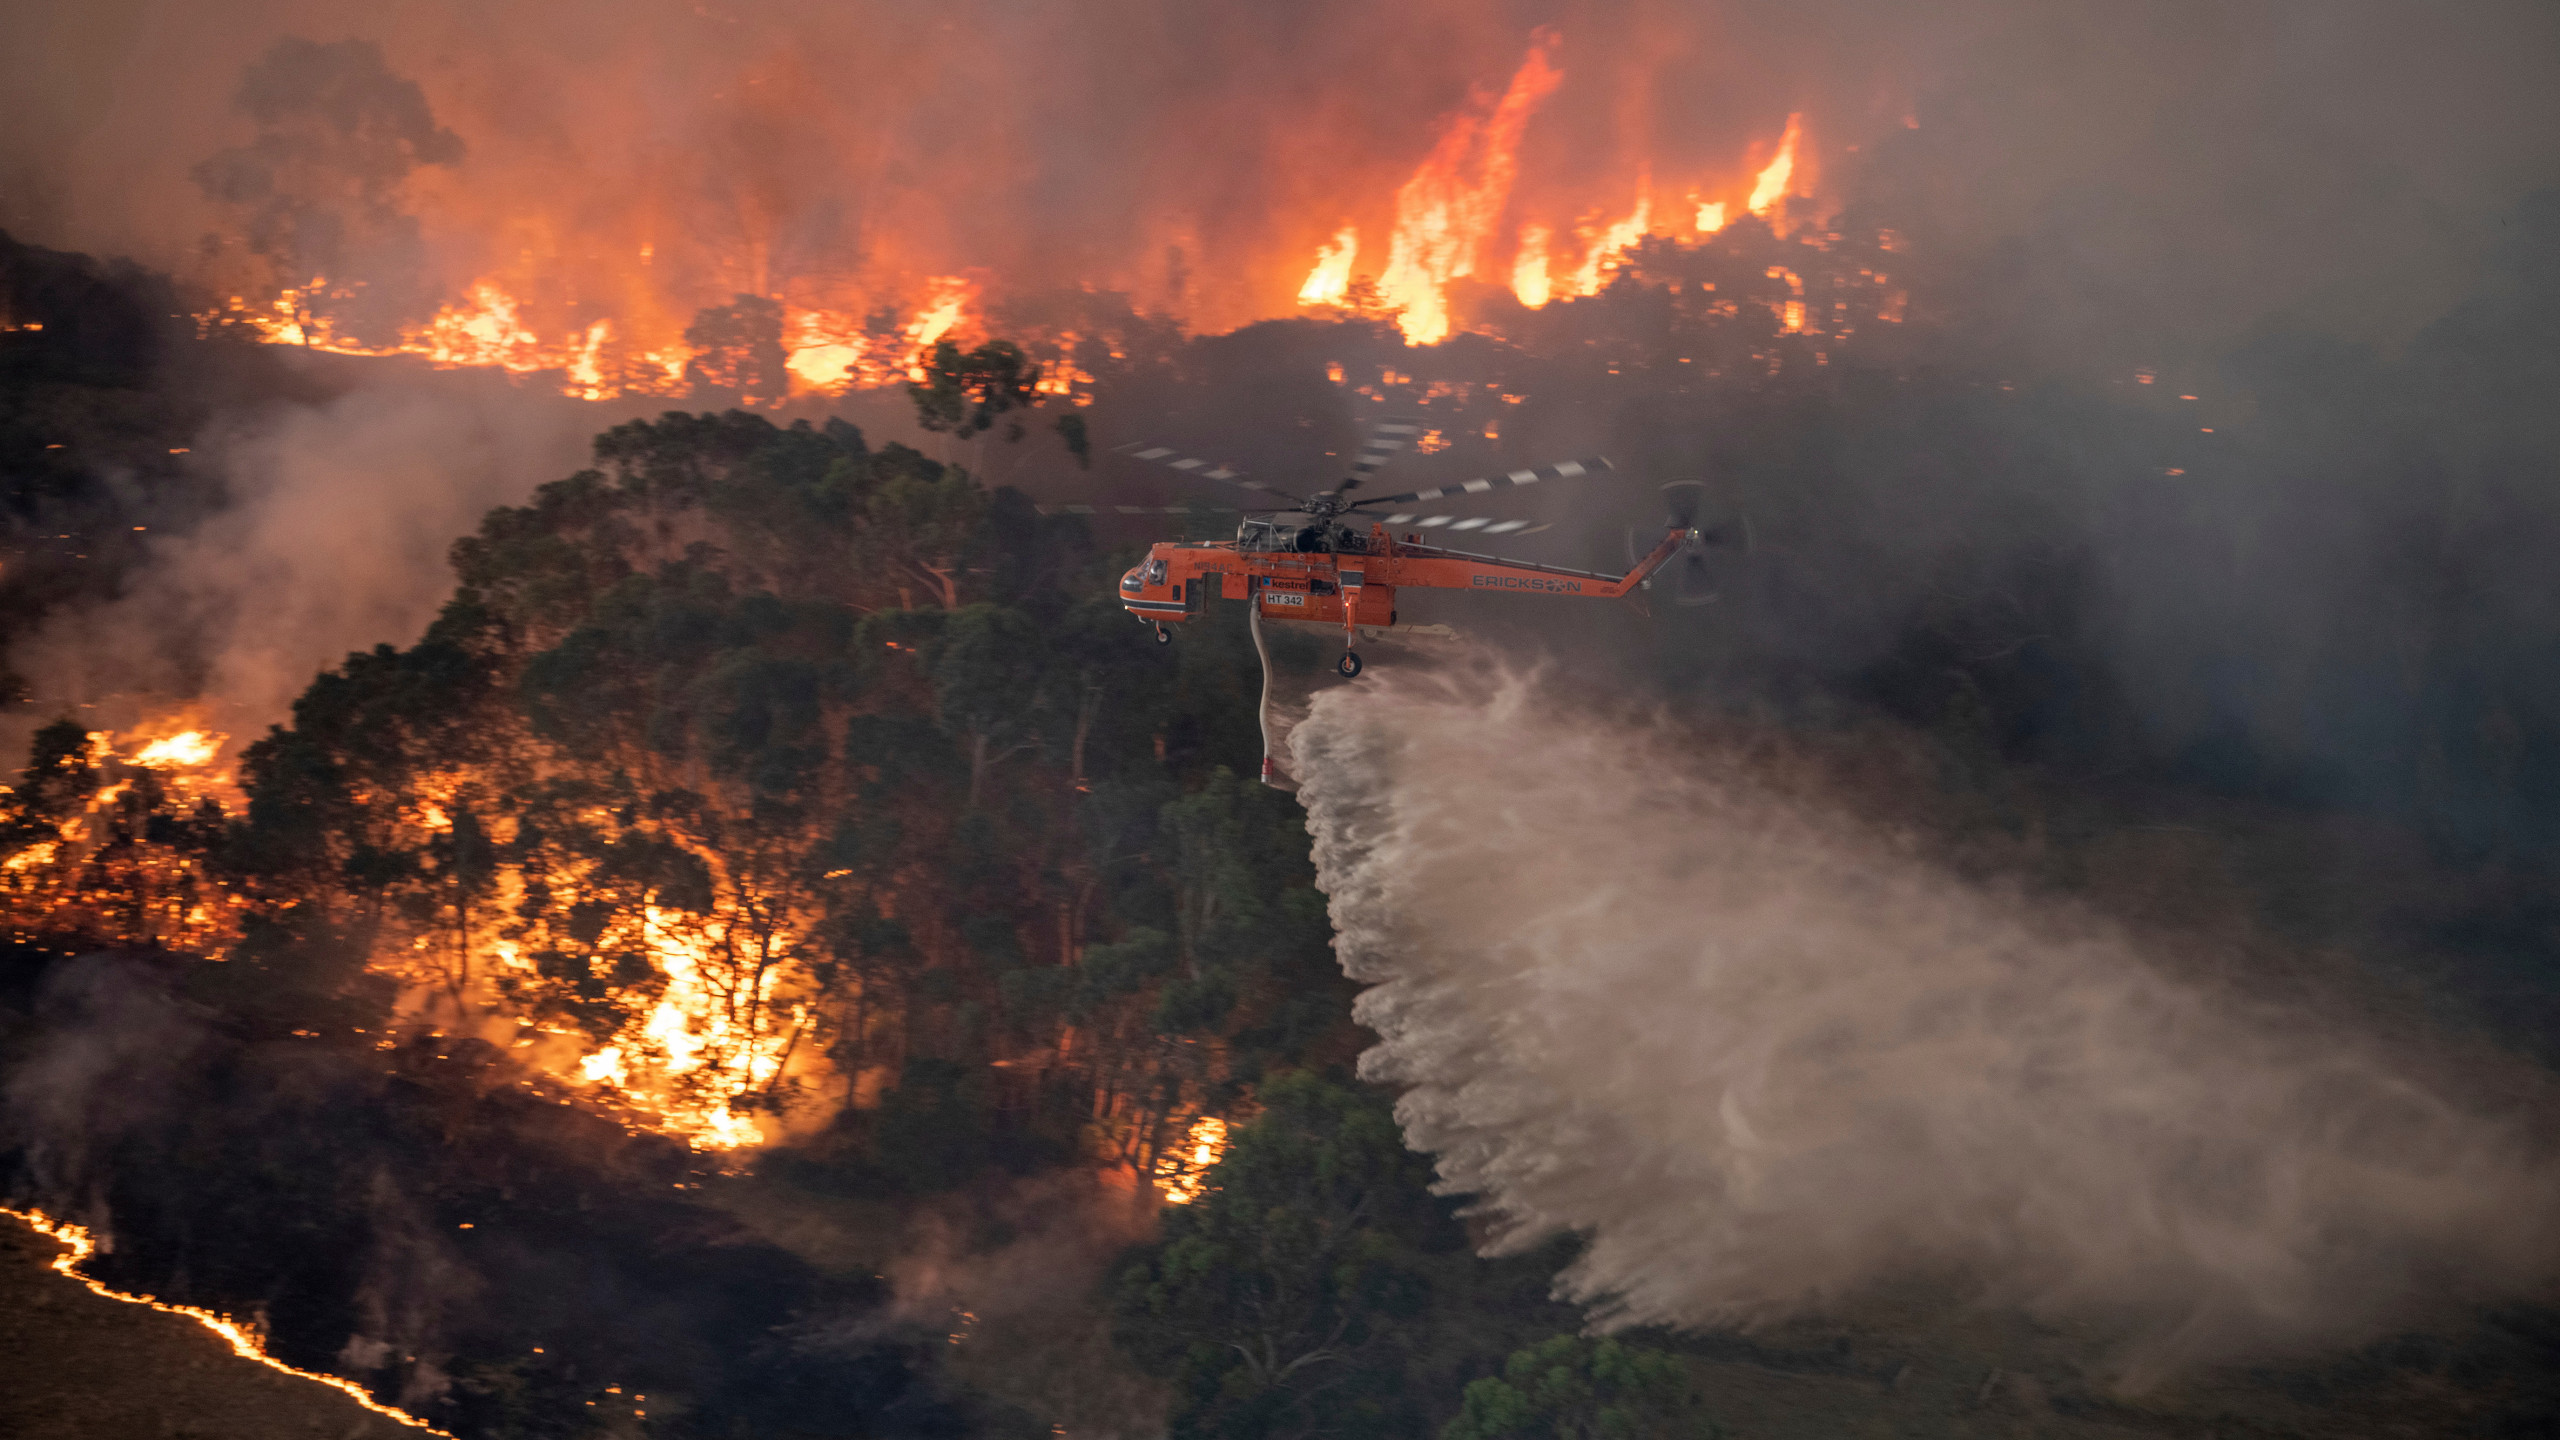 Singer Pink Pledges $500,000 to Help Fight Deadly Brushfires in Australia